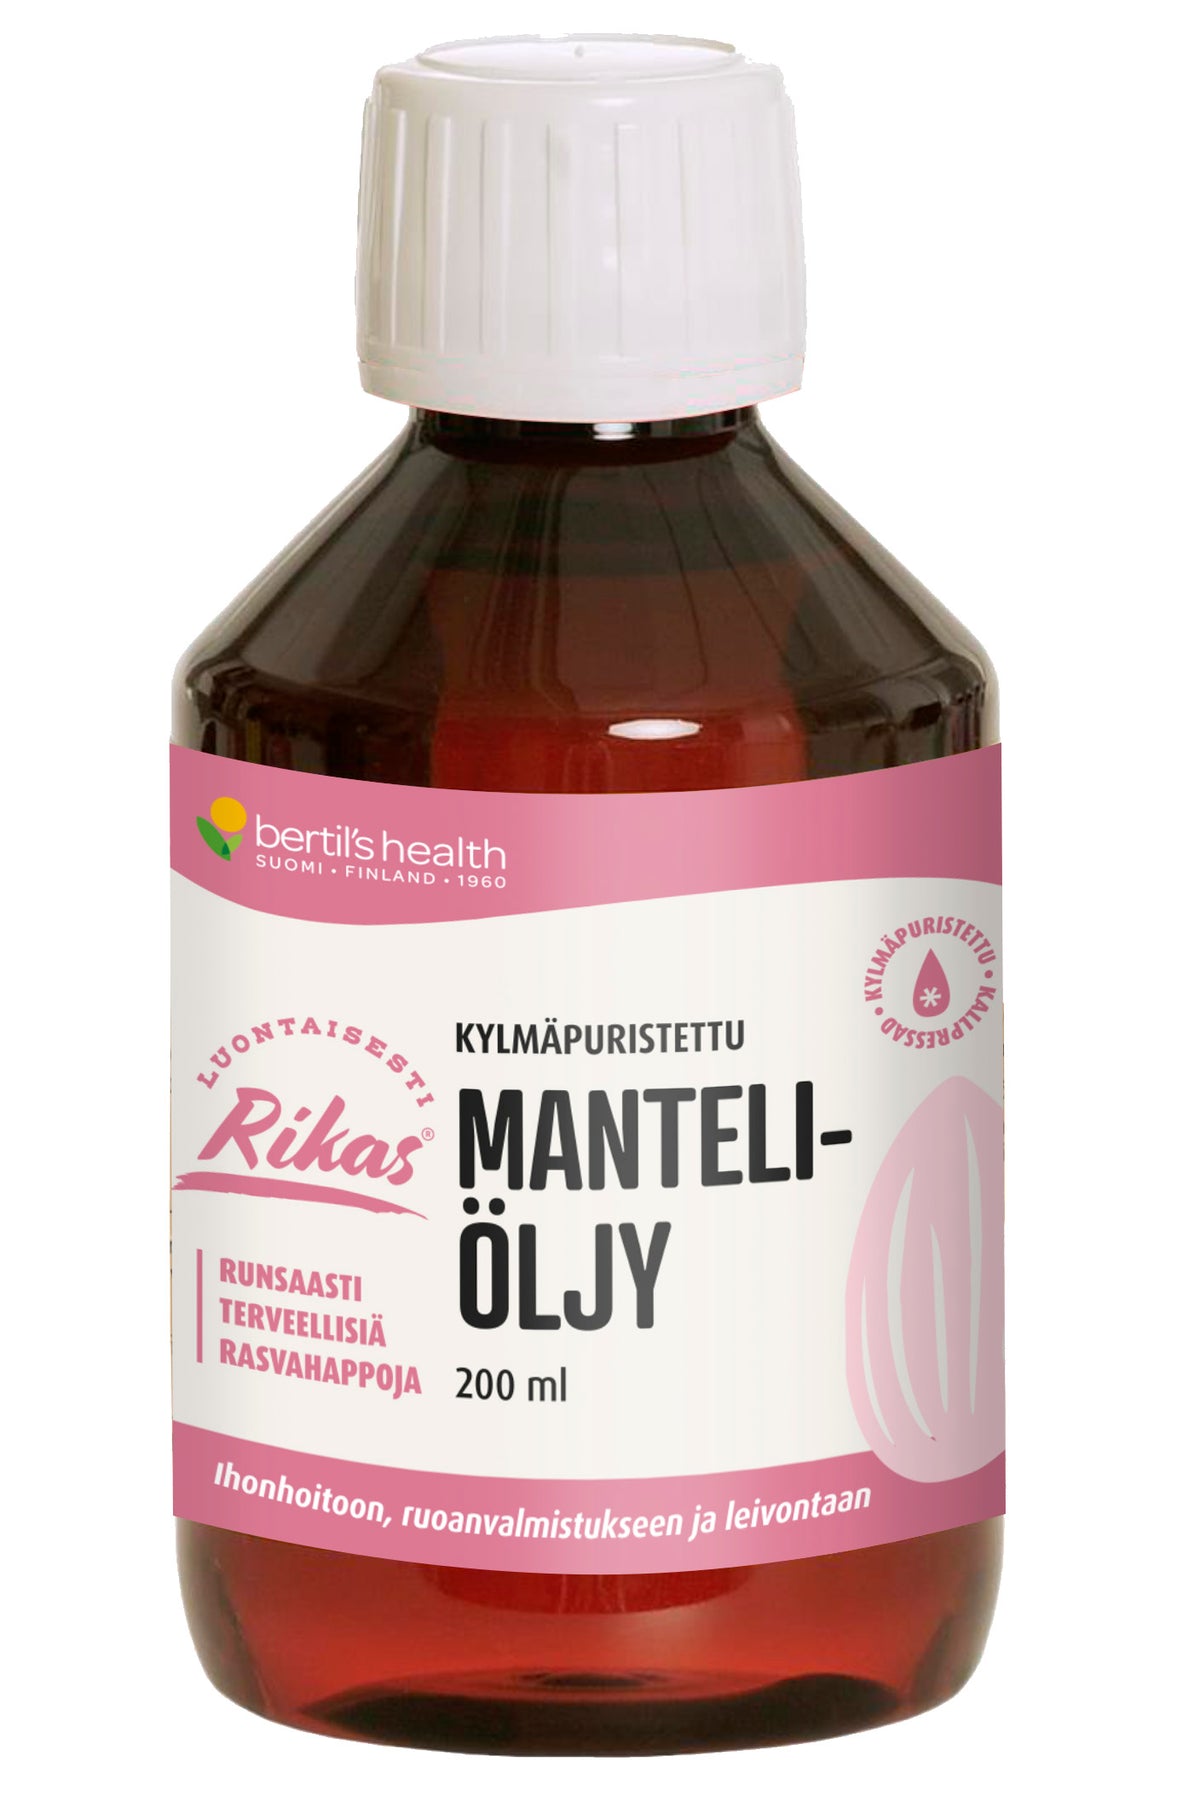 Bertil's Health Kylmäpuristettu Manteliöljy 200 ml